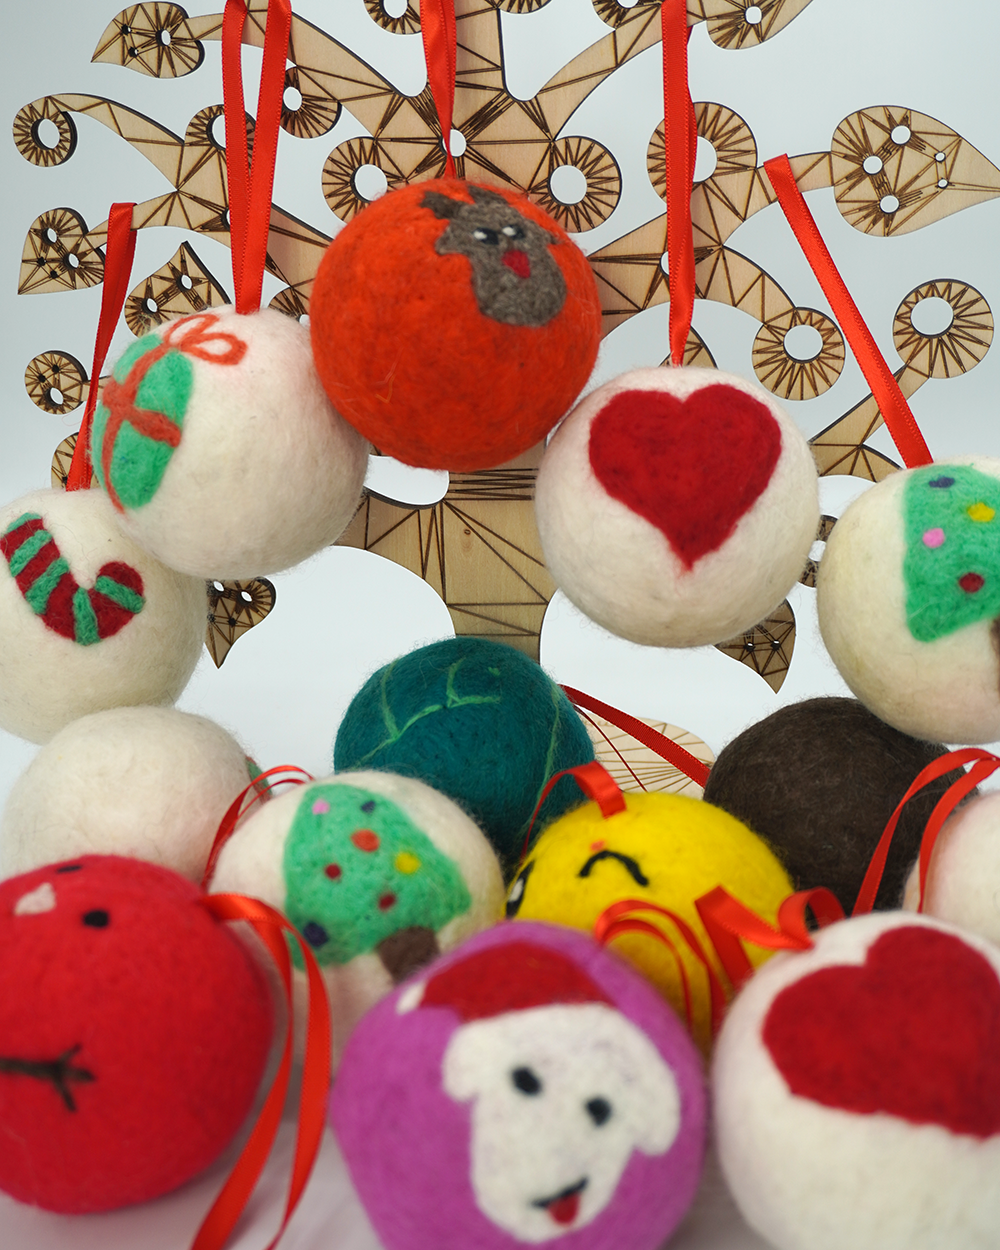 100% Wool Handmade Ornaments